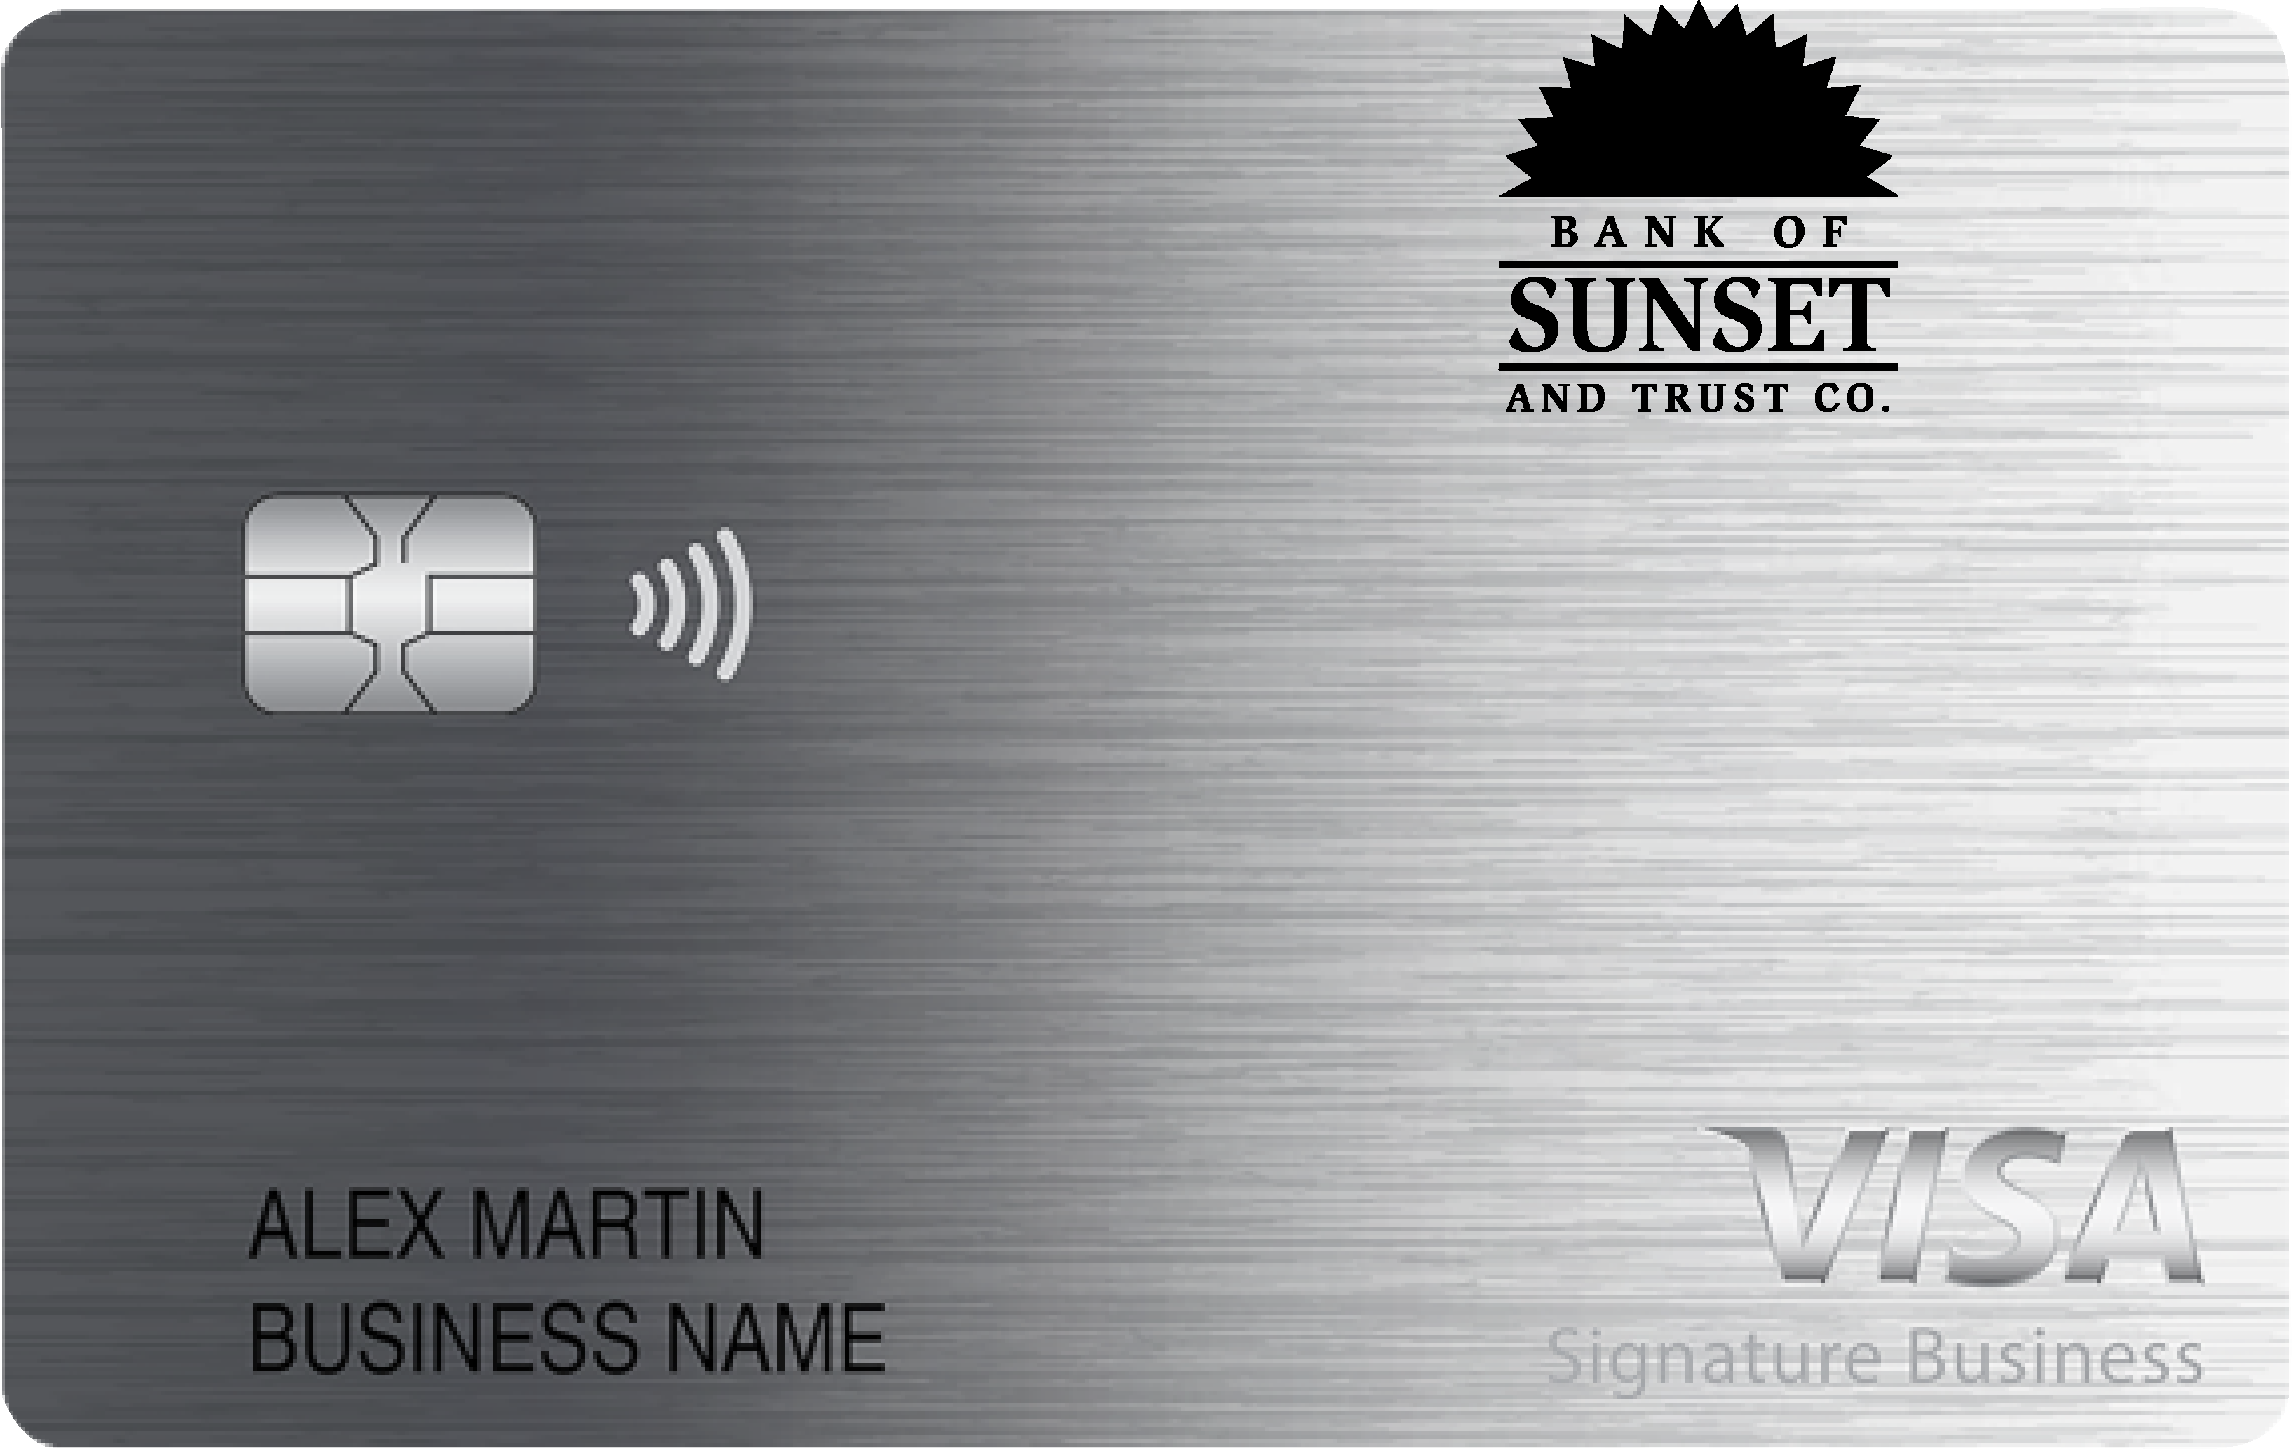 Bank of Sunset Smart Business Rewards Card